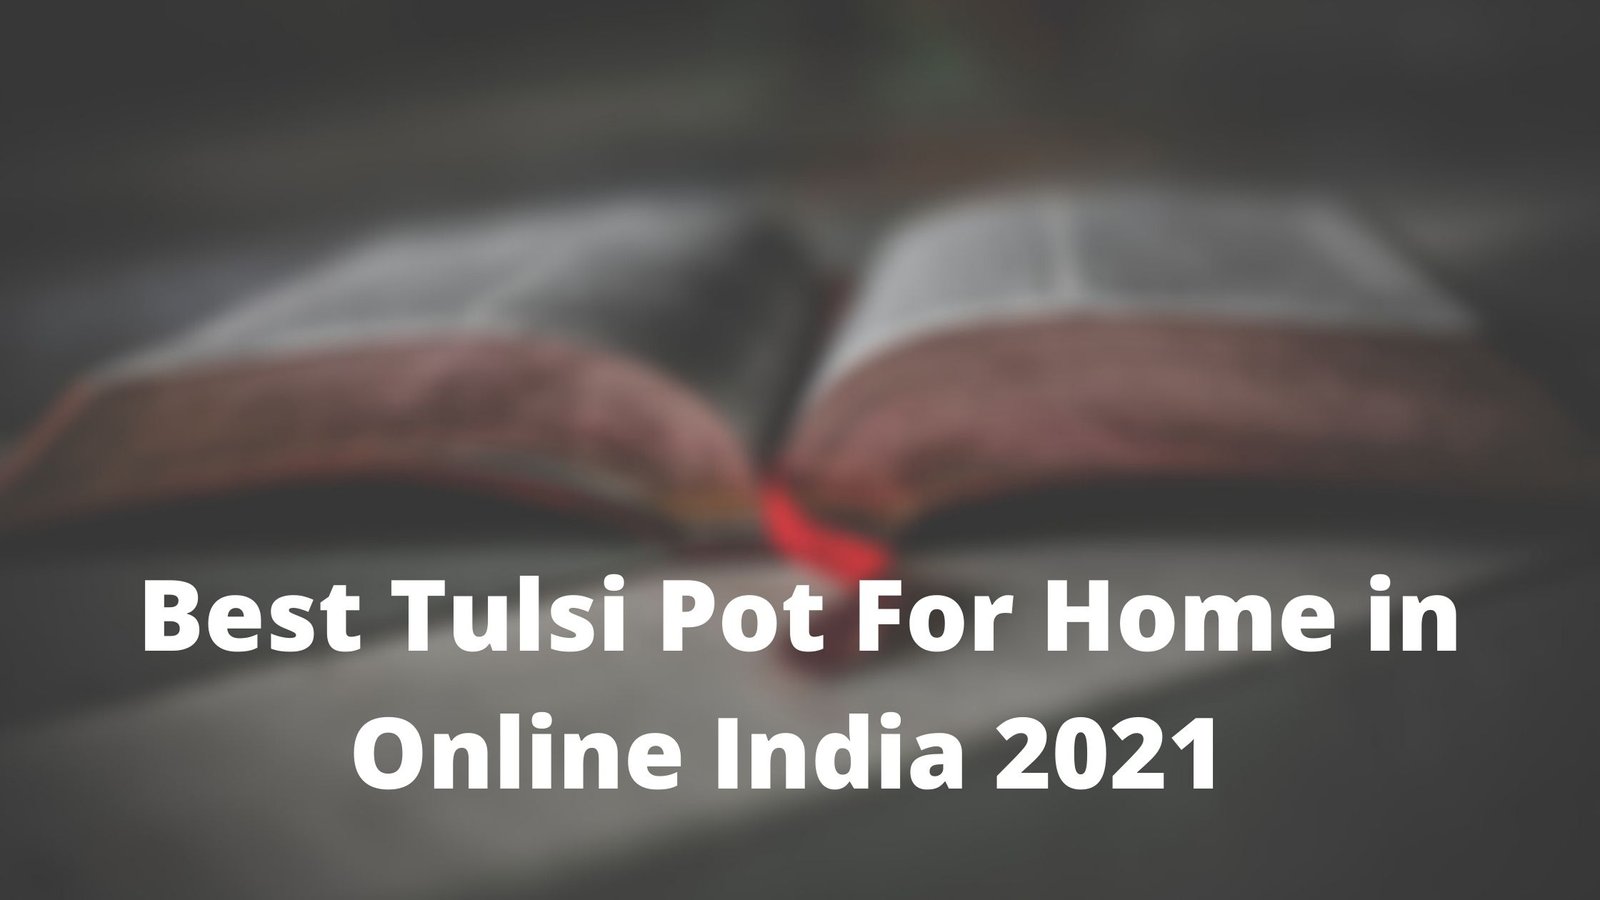 Tulsi Pot in Online India 2021